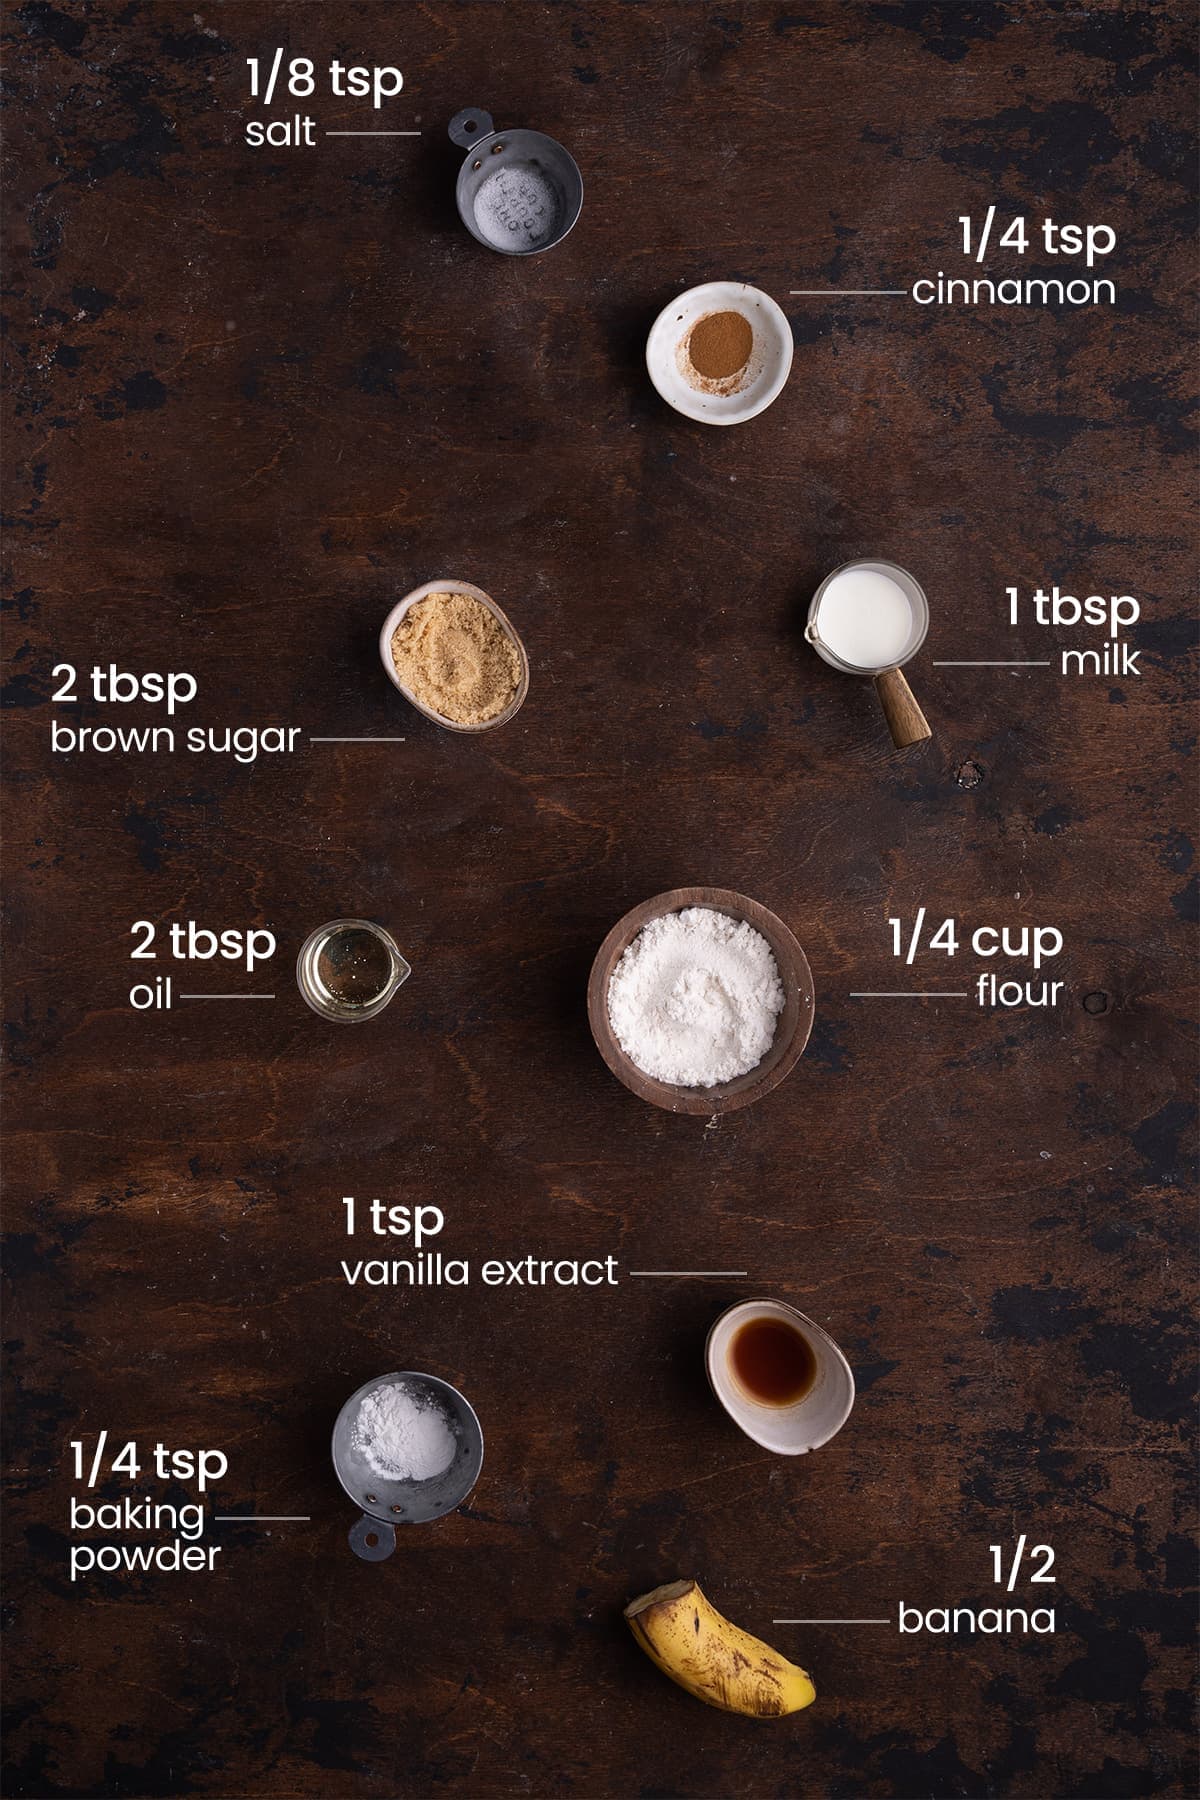 all ingredients for banana bread mug cake - salt, cinnamon, brown sugar, milk, oil, flour, vanilla extract, baking powder, banana